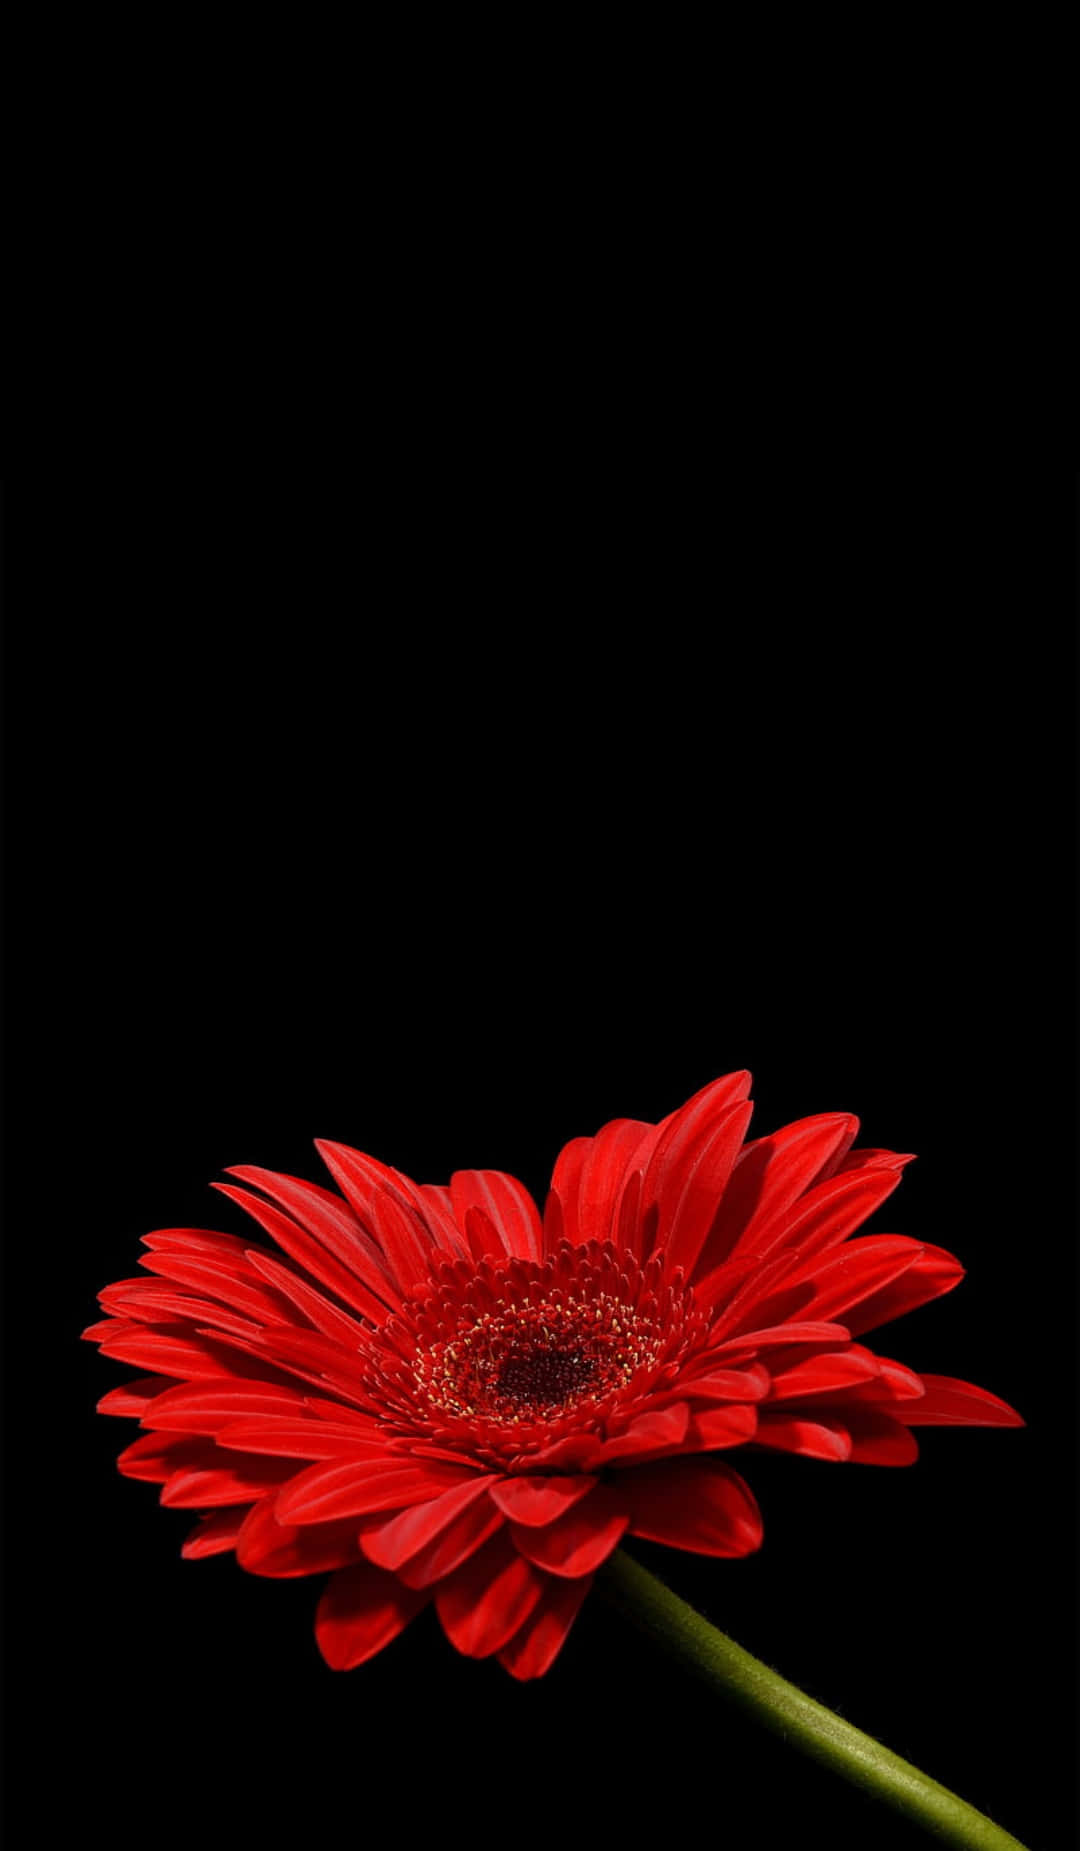 red sunflower wallpaper